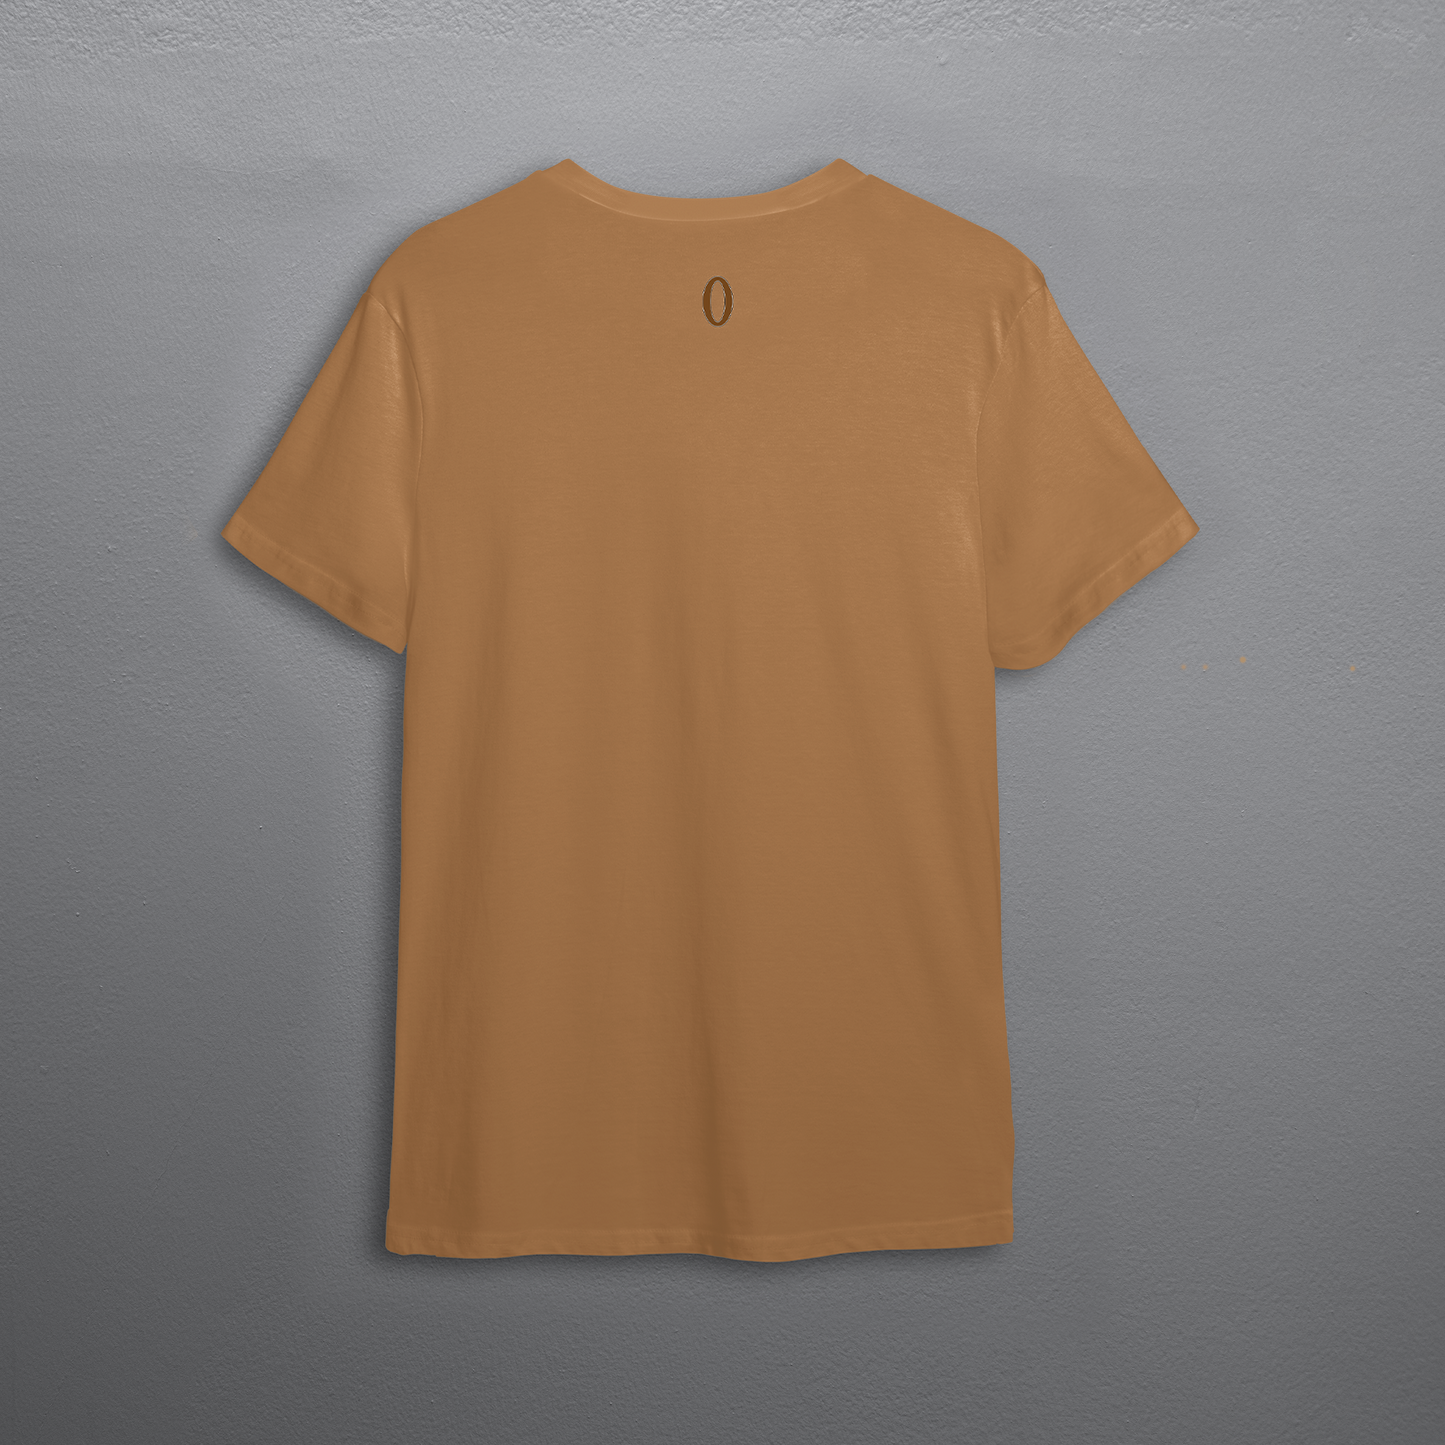 Olympia Las Vegas Skyline Basic Activewear Oversized T-shirt - Tan